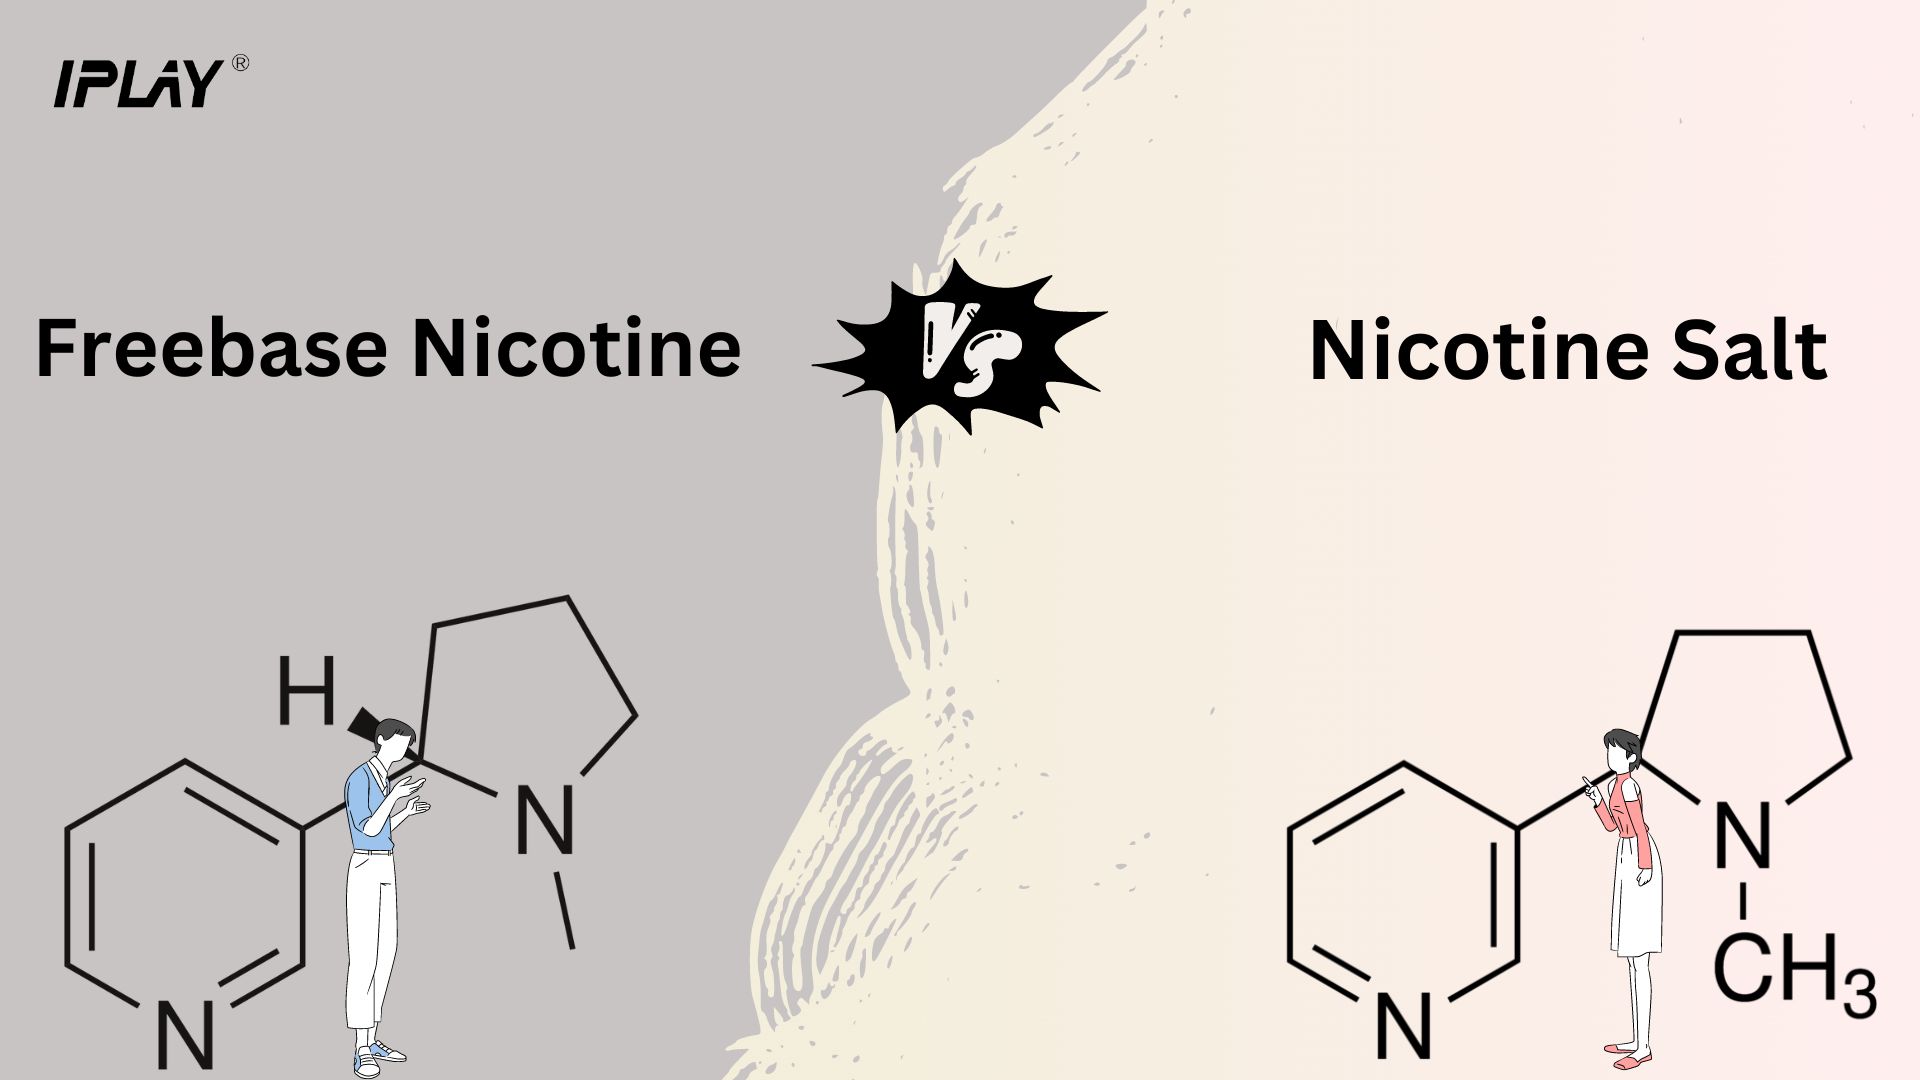 ирекле-никотин-никотин-тоз арасындагы аерма